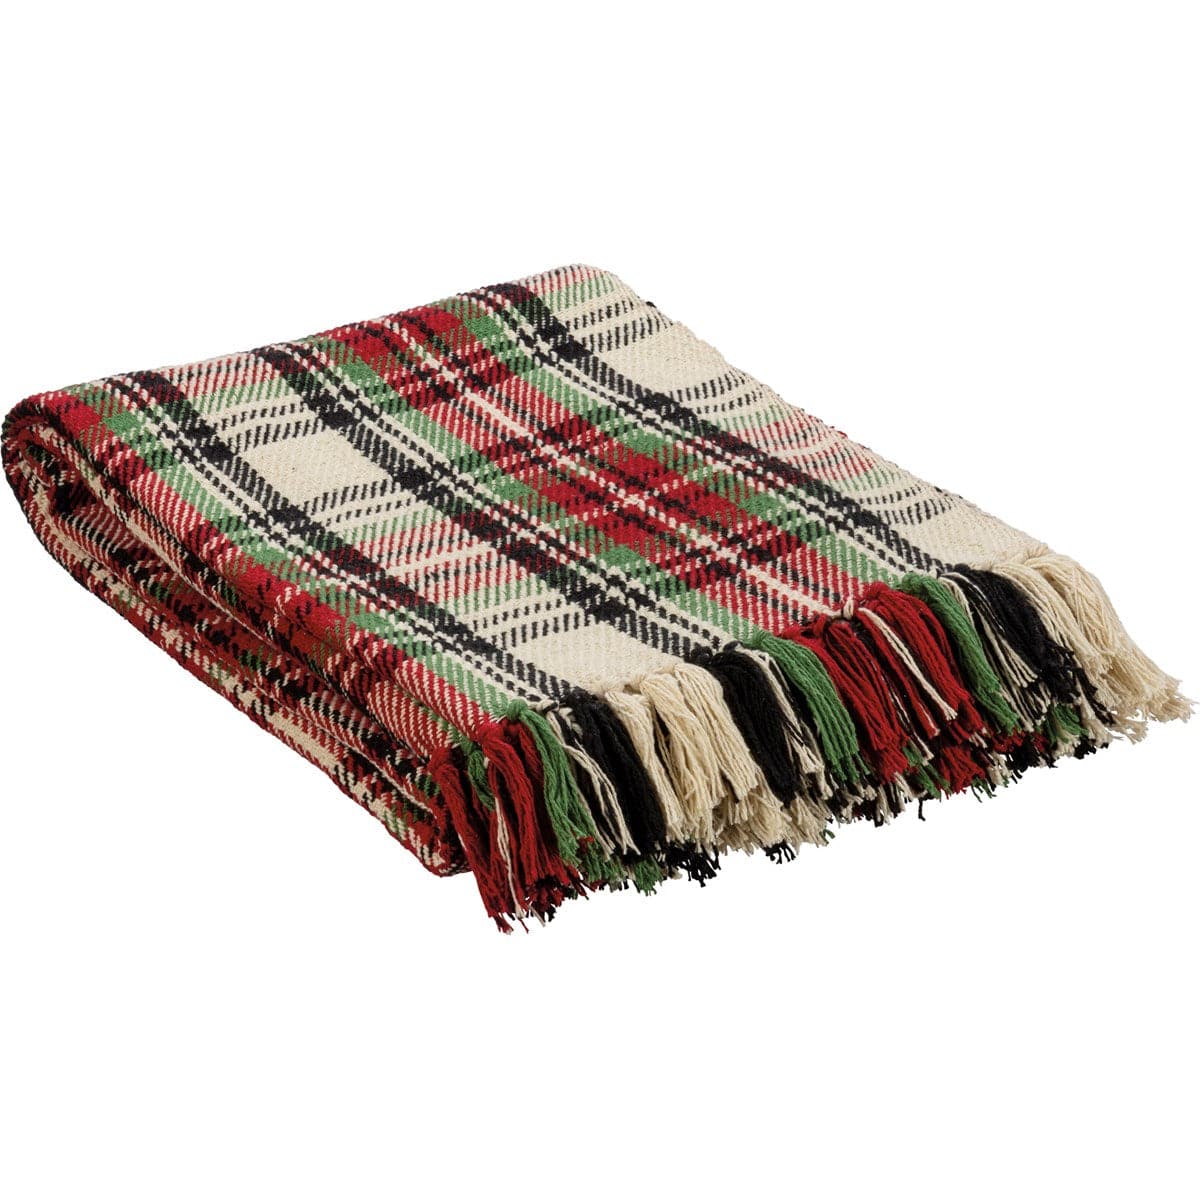 Throw blanket Throw - Classic Cream Plaid Throw Blanket PBK-108423